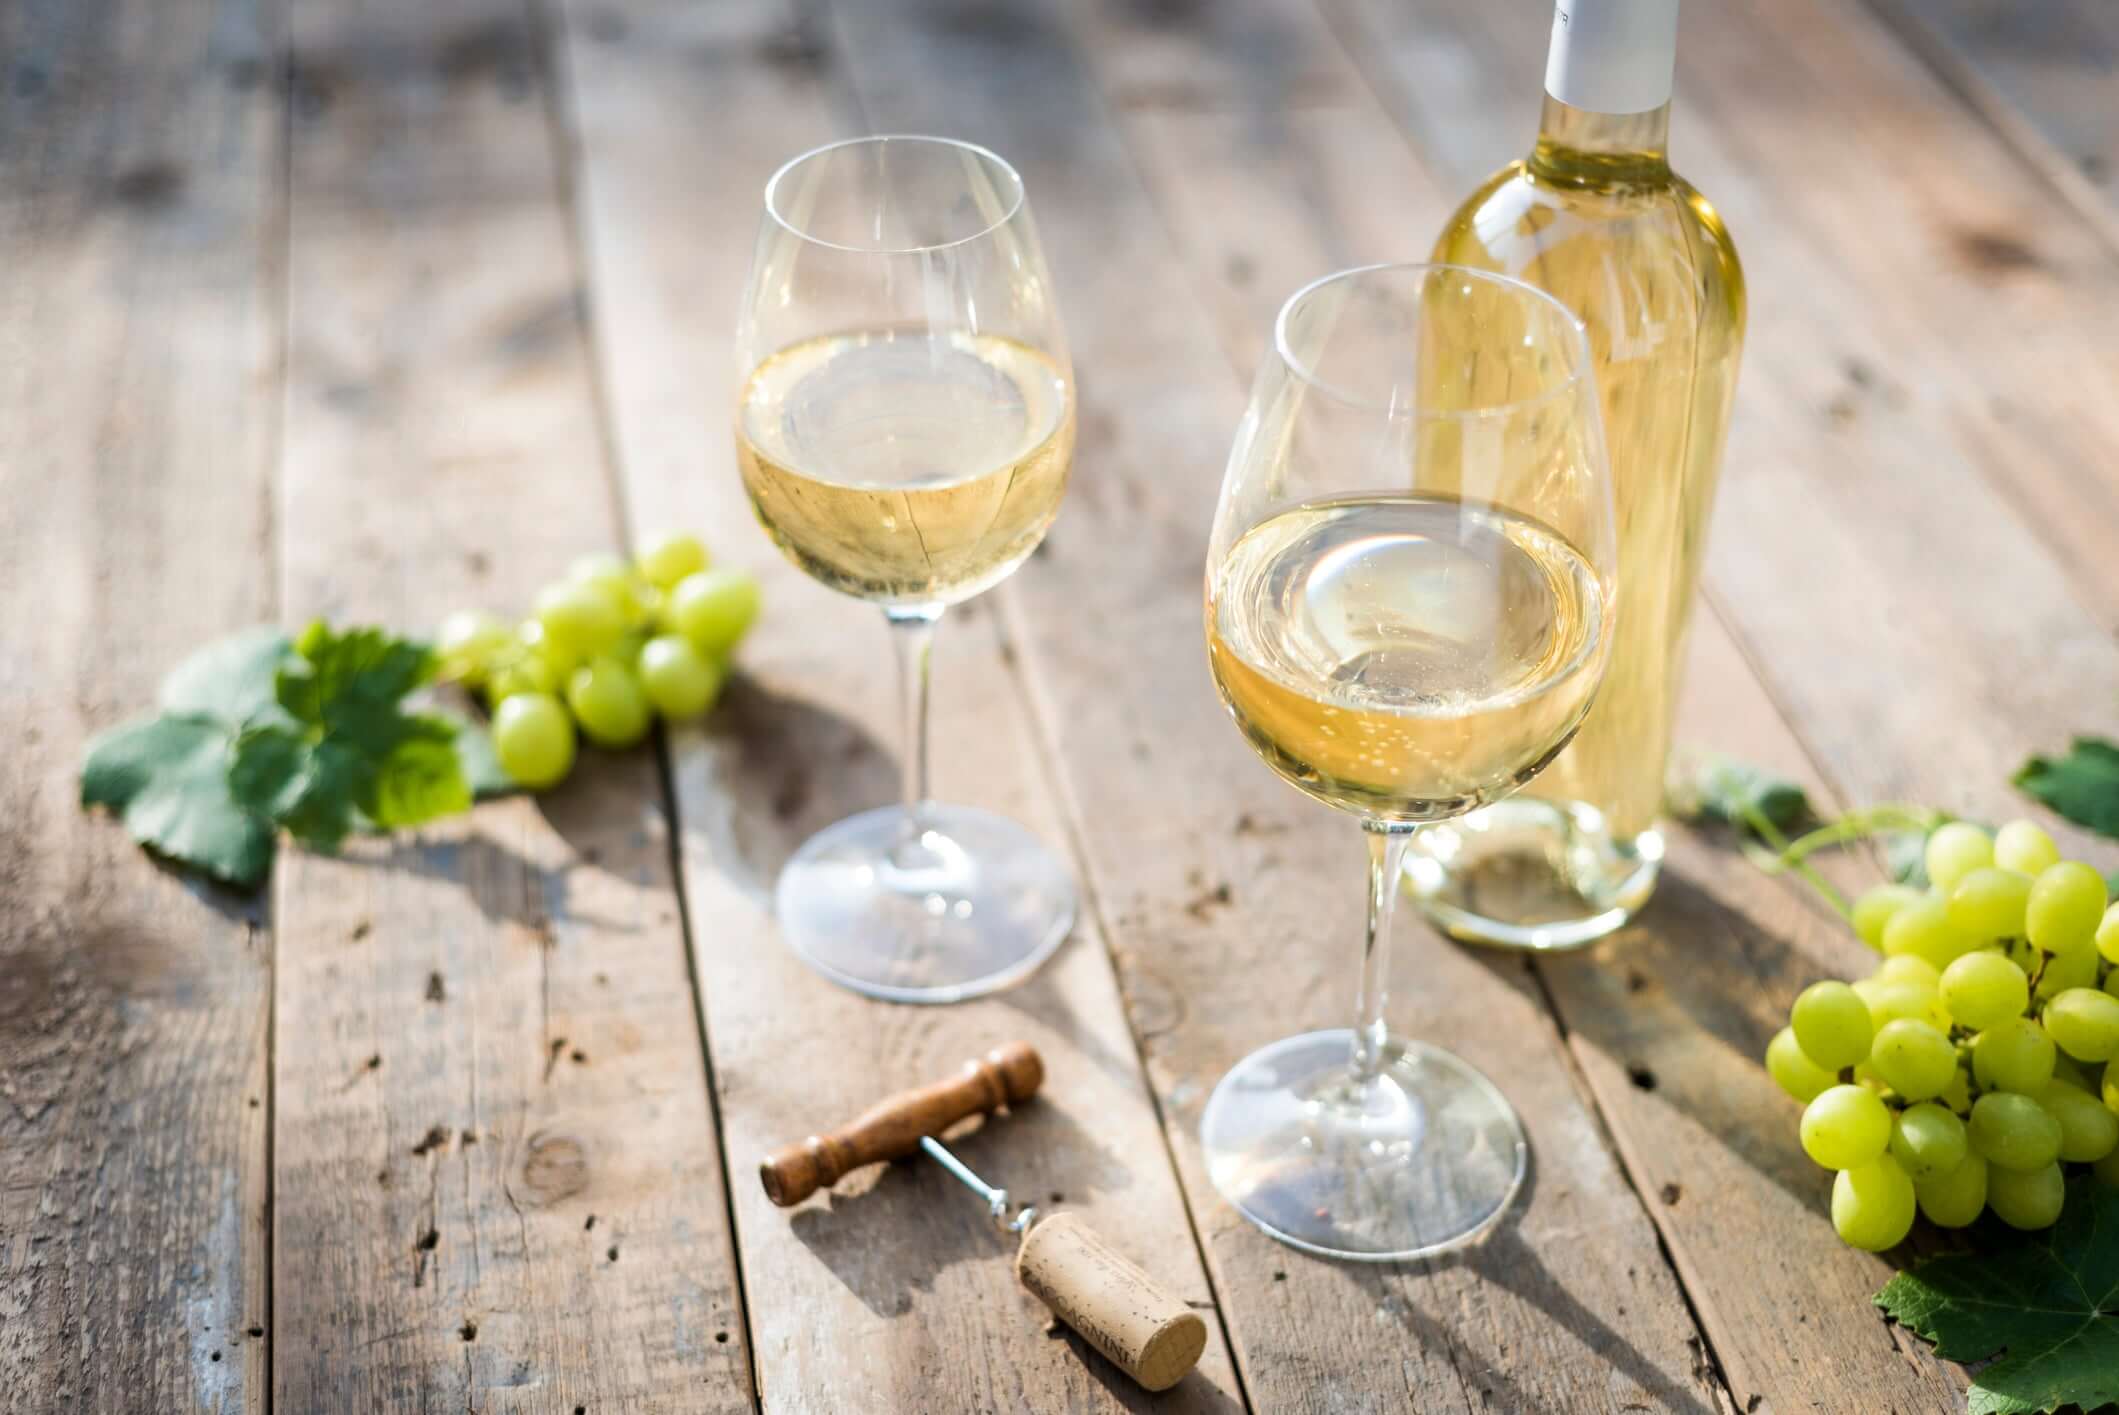 Top Ten Under-10 Dollars White Wines